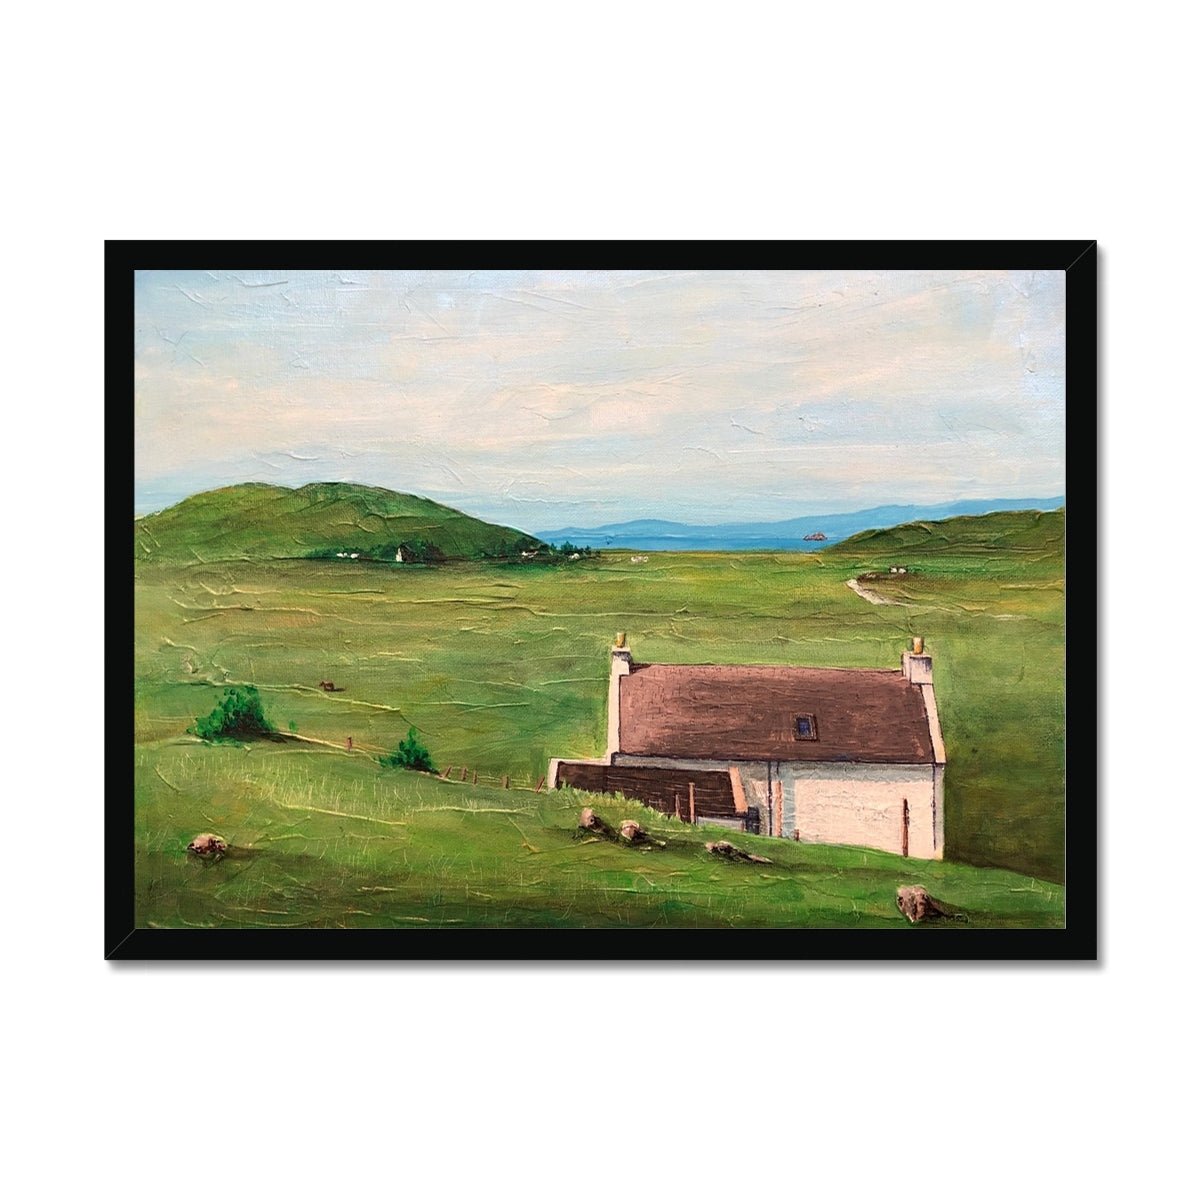 A Skye Cottage Painting | Framed Prints From Scotland-Framed Prints-Skye Art Gallery-A2 Landscape-Black Frame-Paintings, Prints, Homeware, Art Gifts From Scotland By Scottish Artist Kevin Hunter